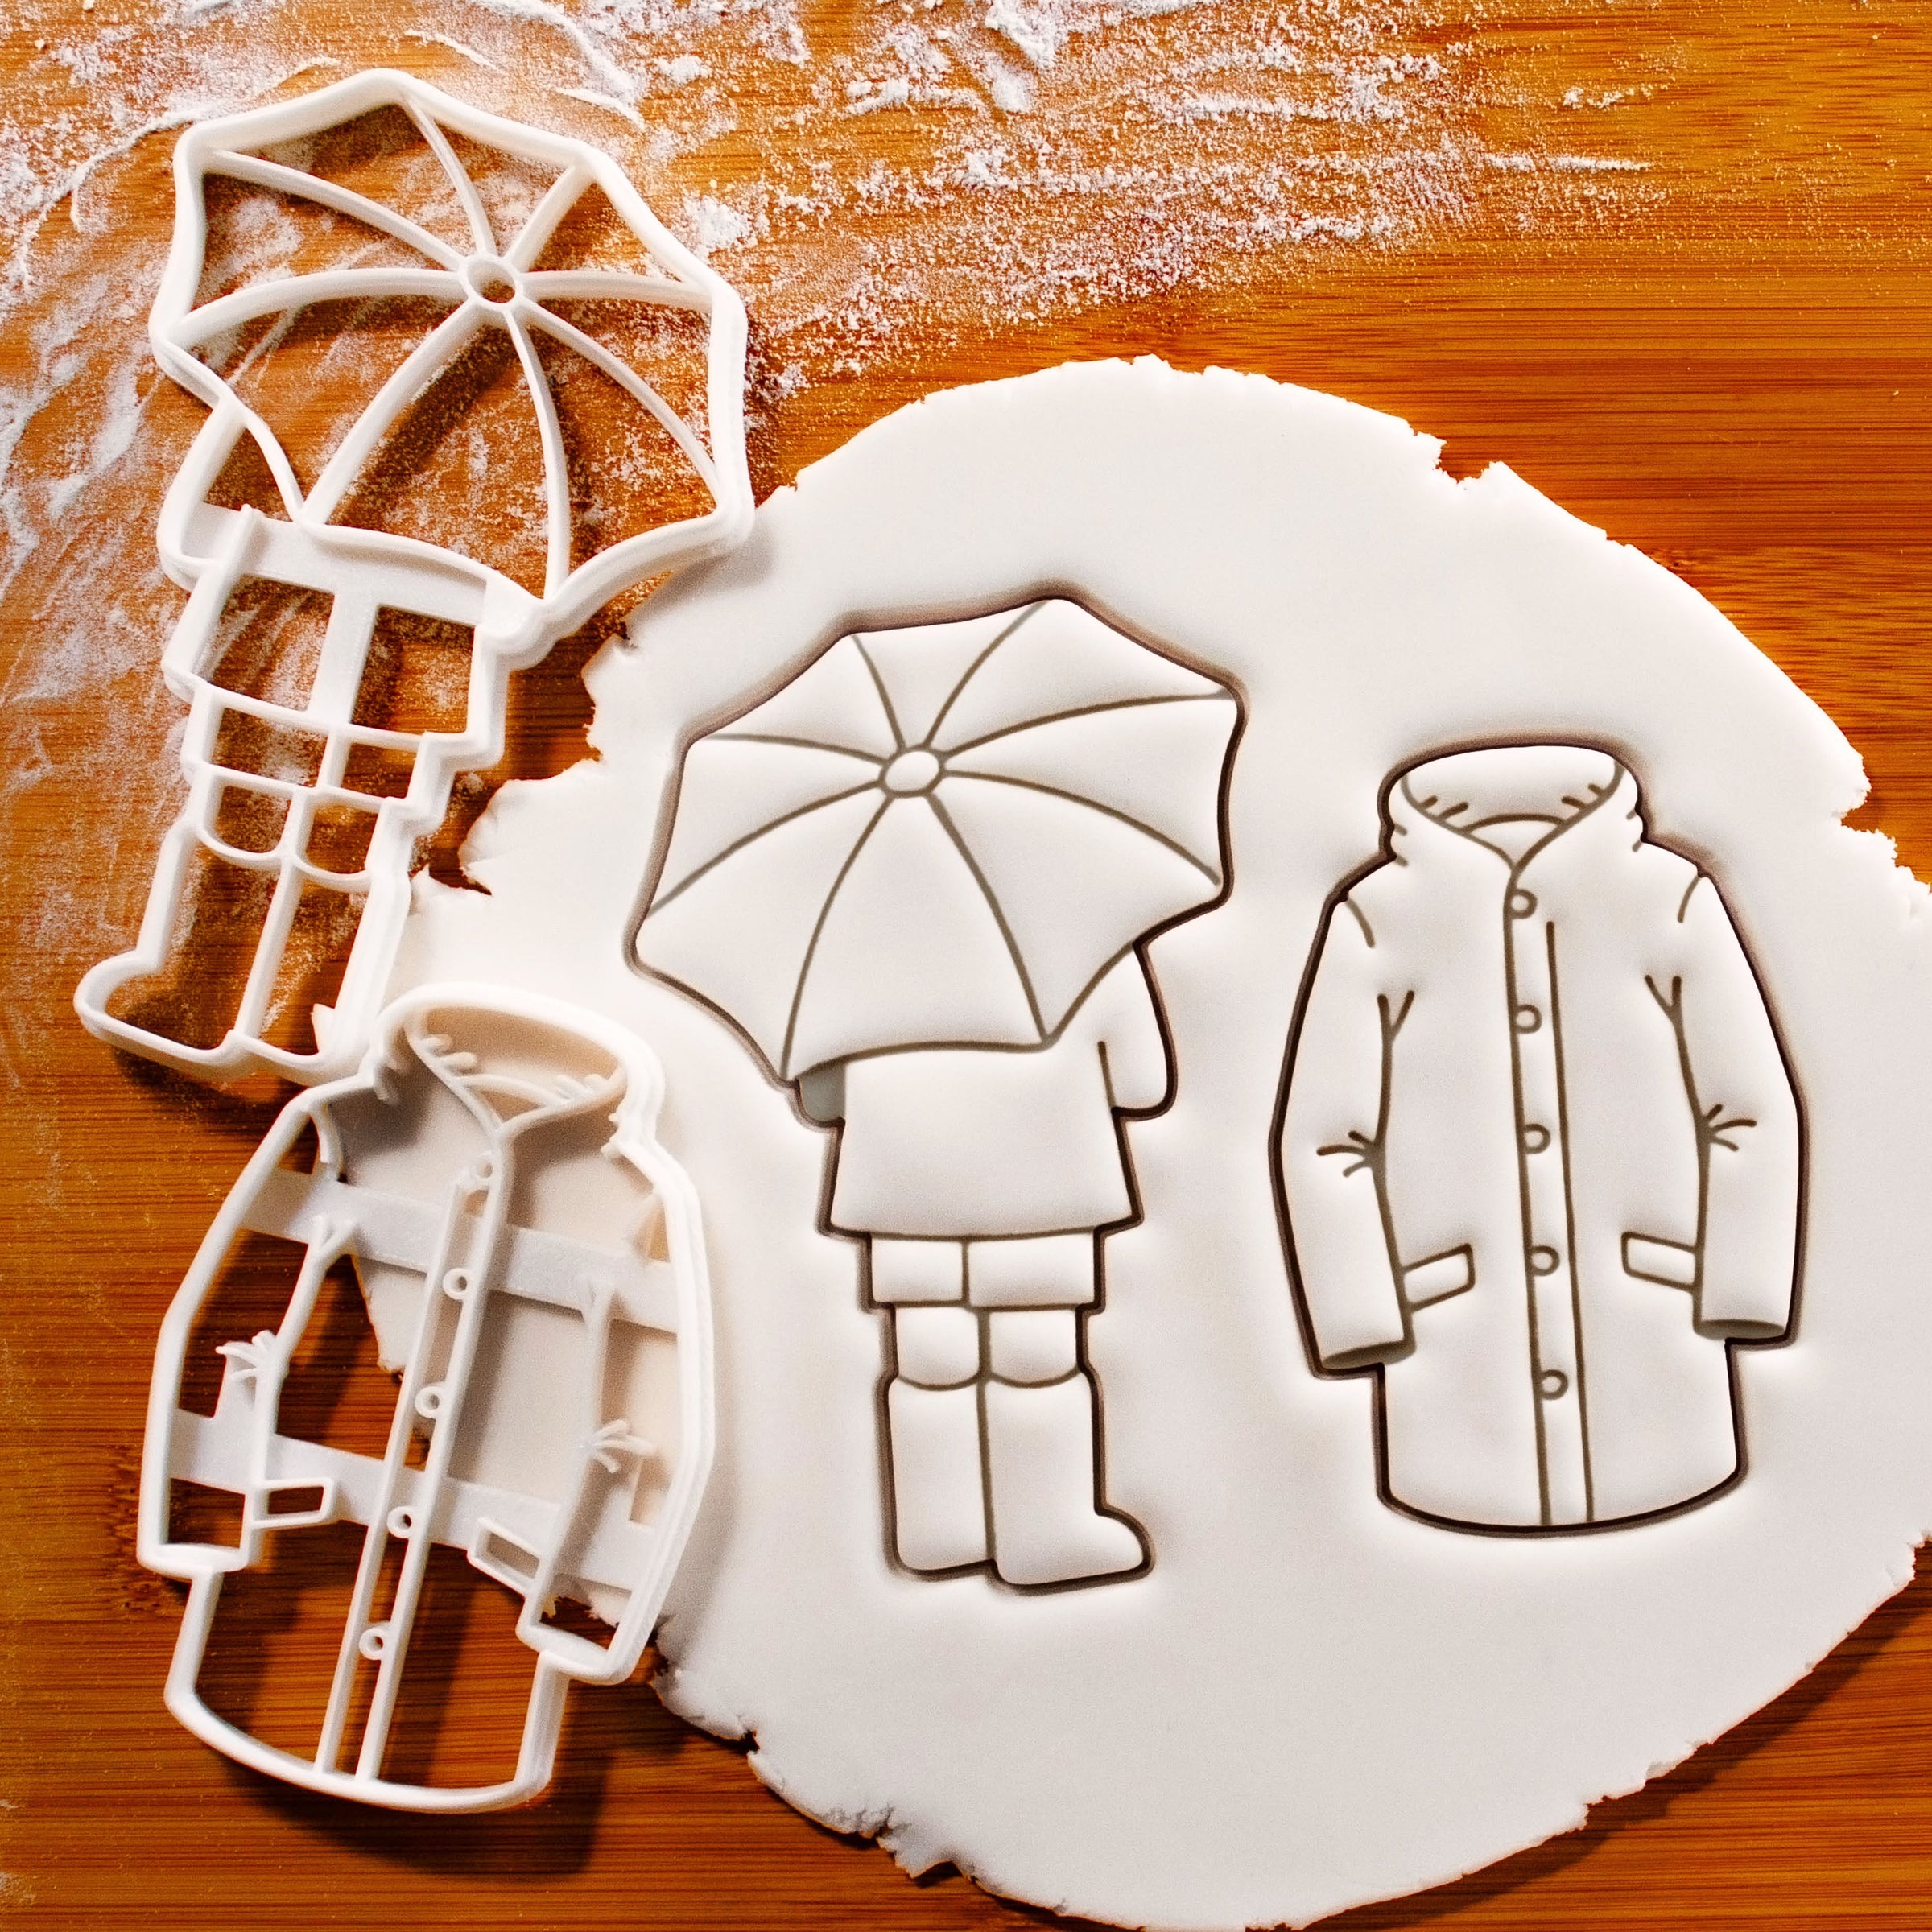 PROMO SET: Raincoat and Umbrella Buddy Cookie Cutters